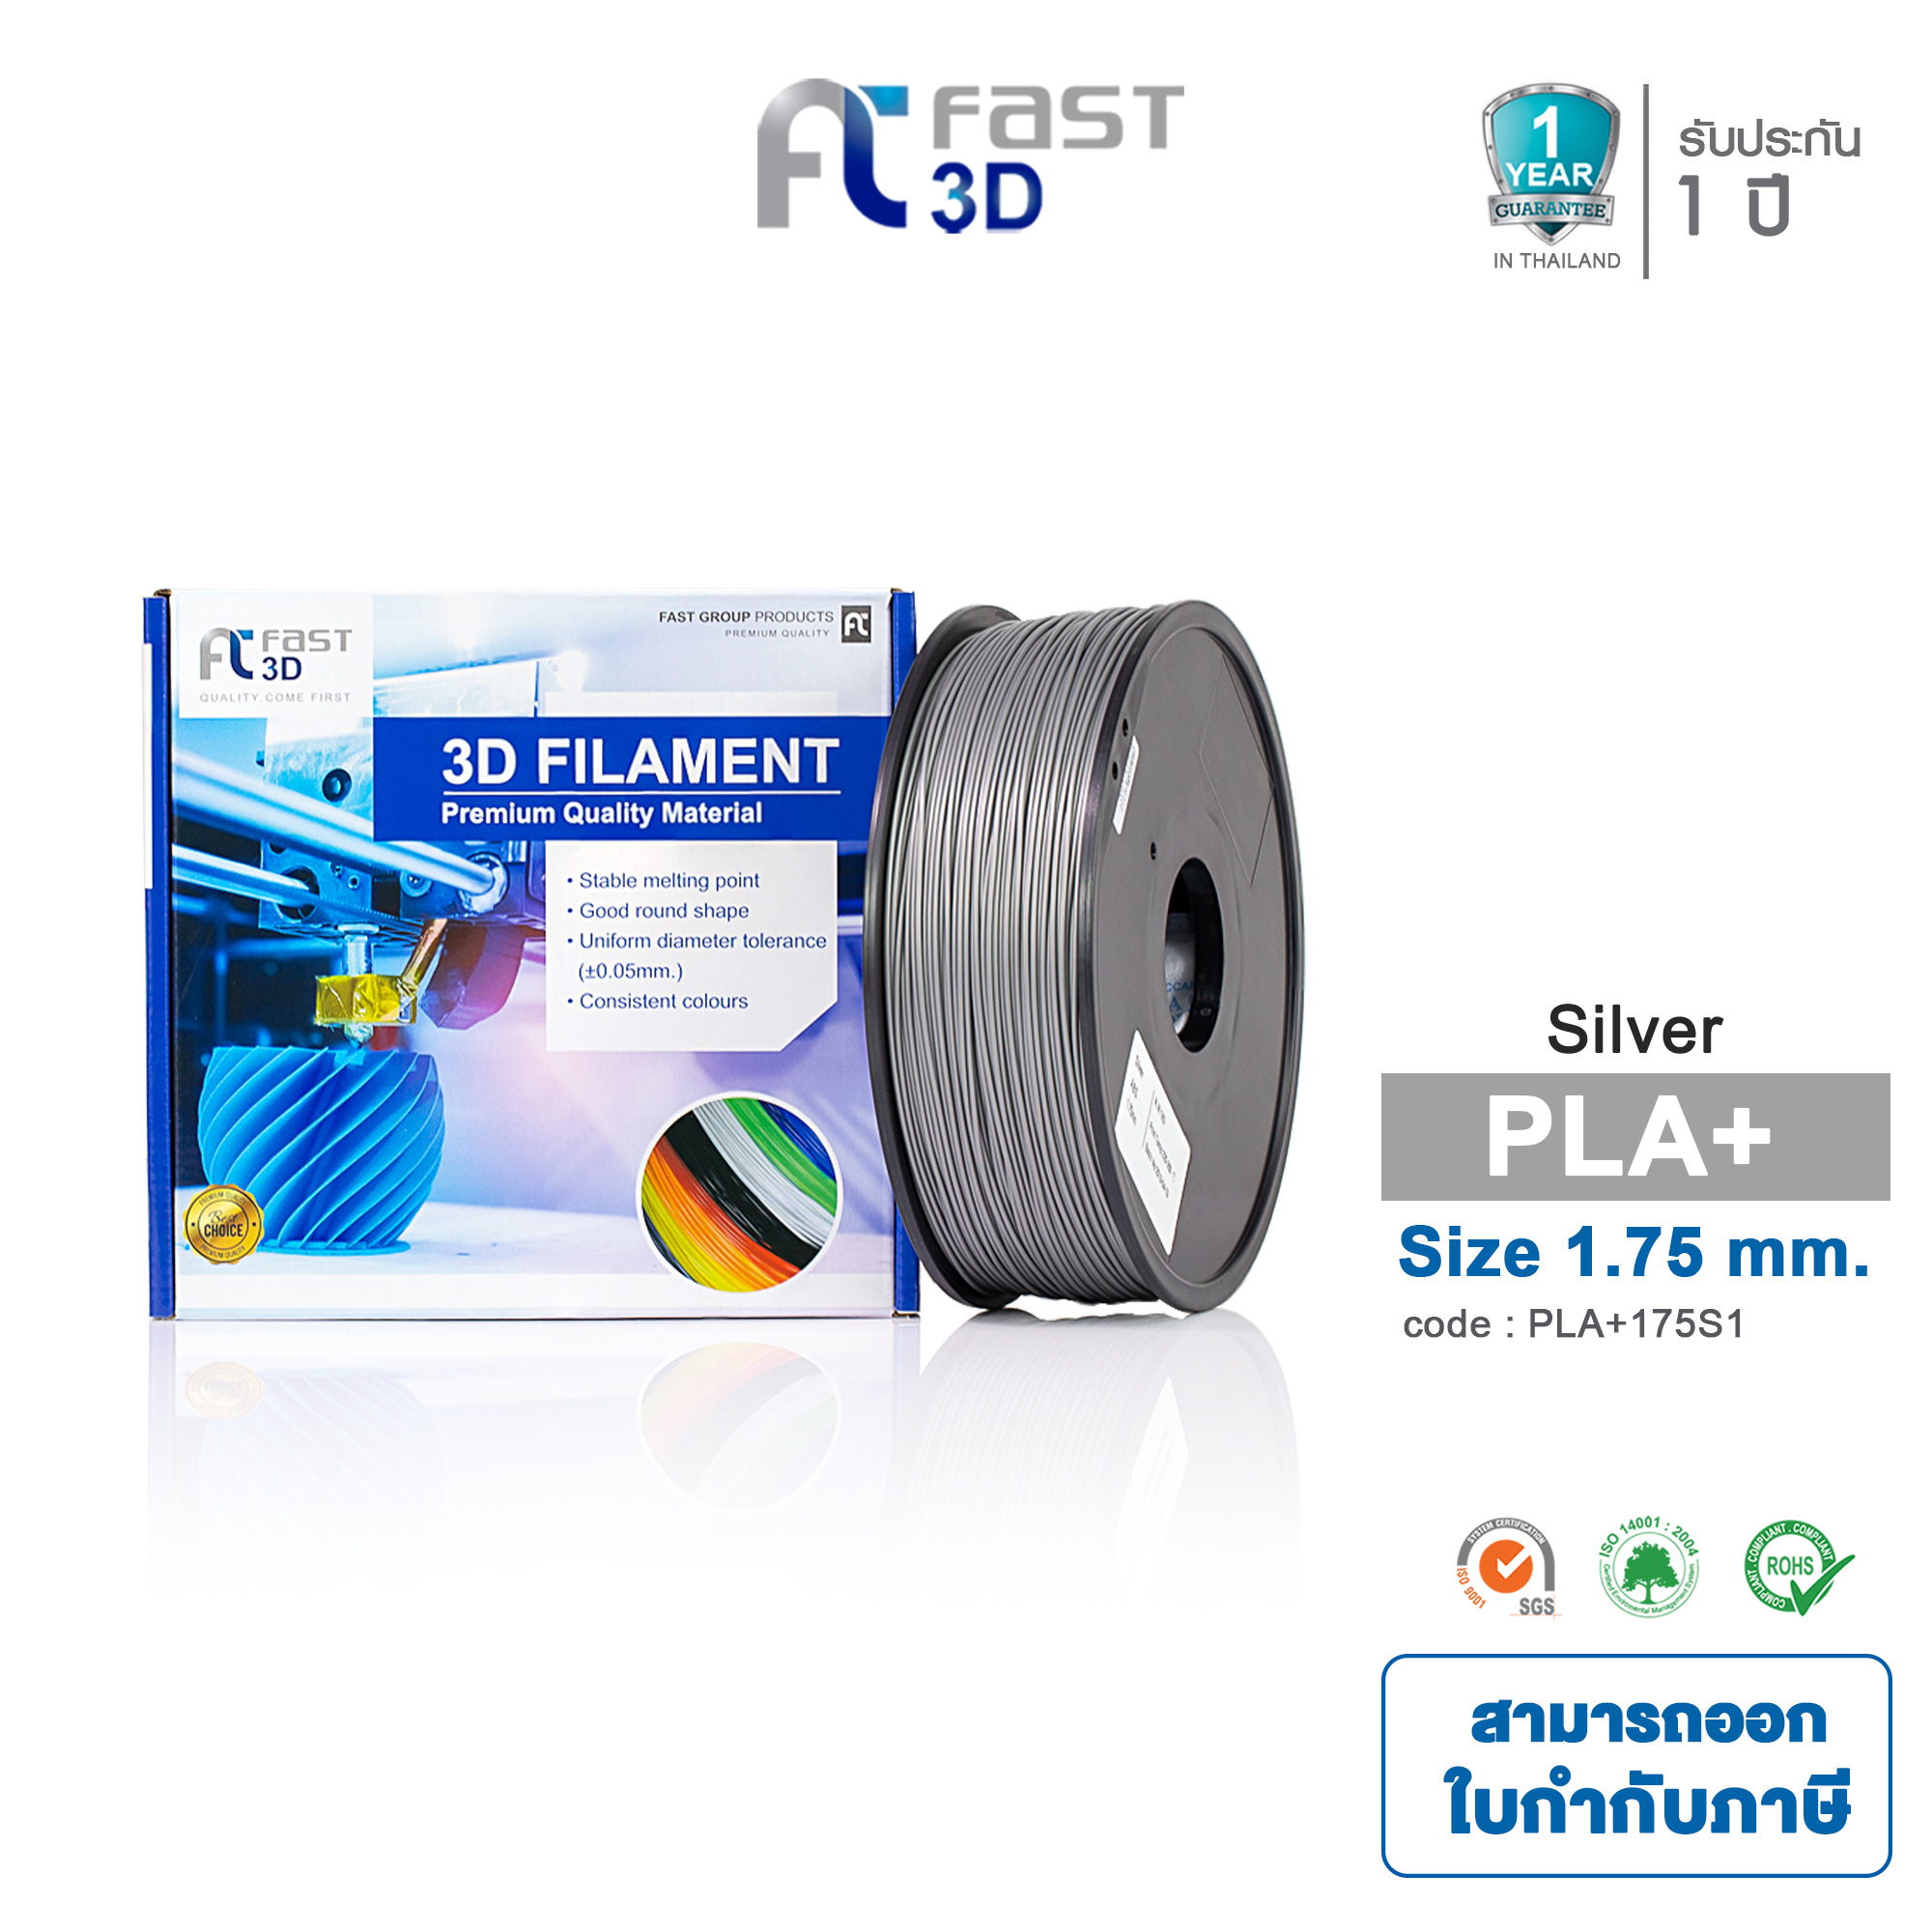 Fast 3D เส้นพลาสติก PLA+ Filament (Silver) ใช้กับเครื่องปริ้น 3 มิติ ขนาด 1.75 mm.